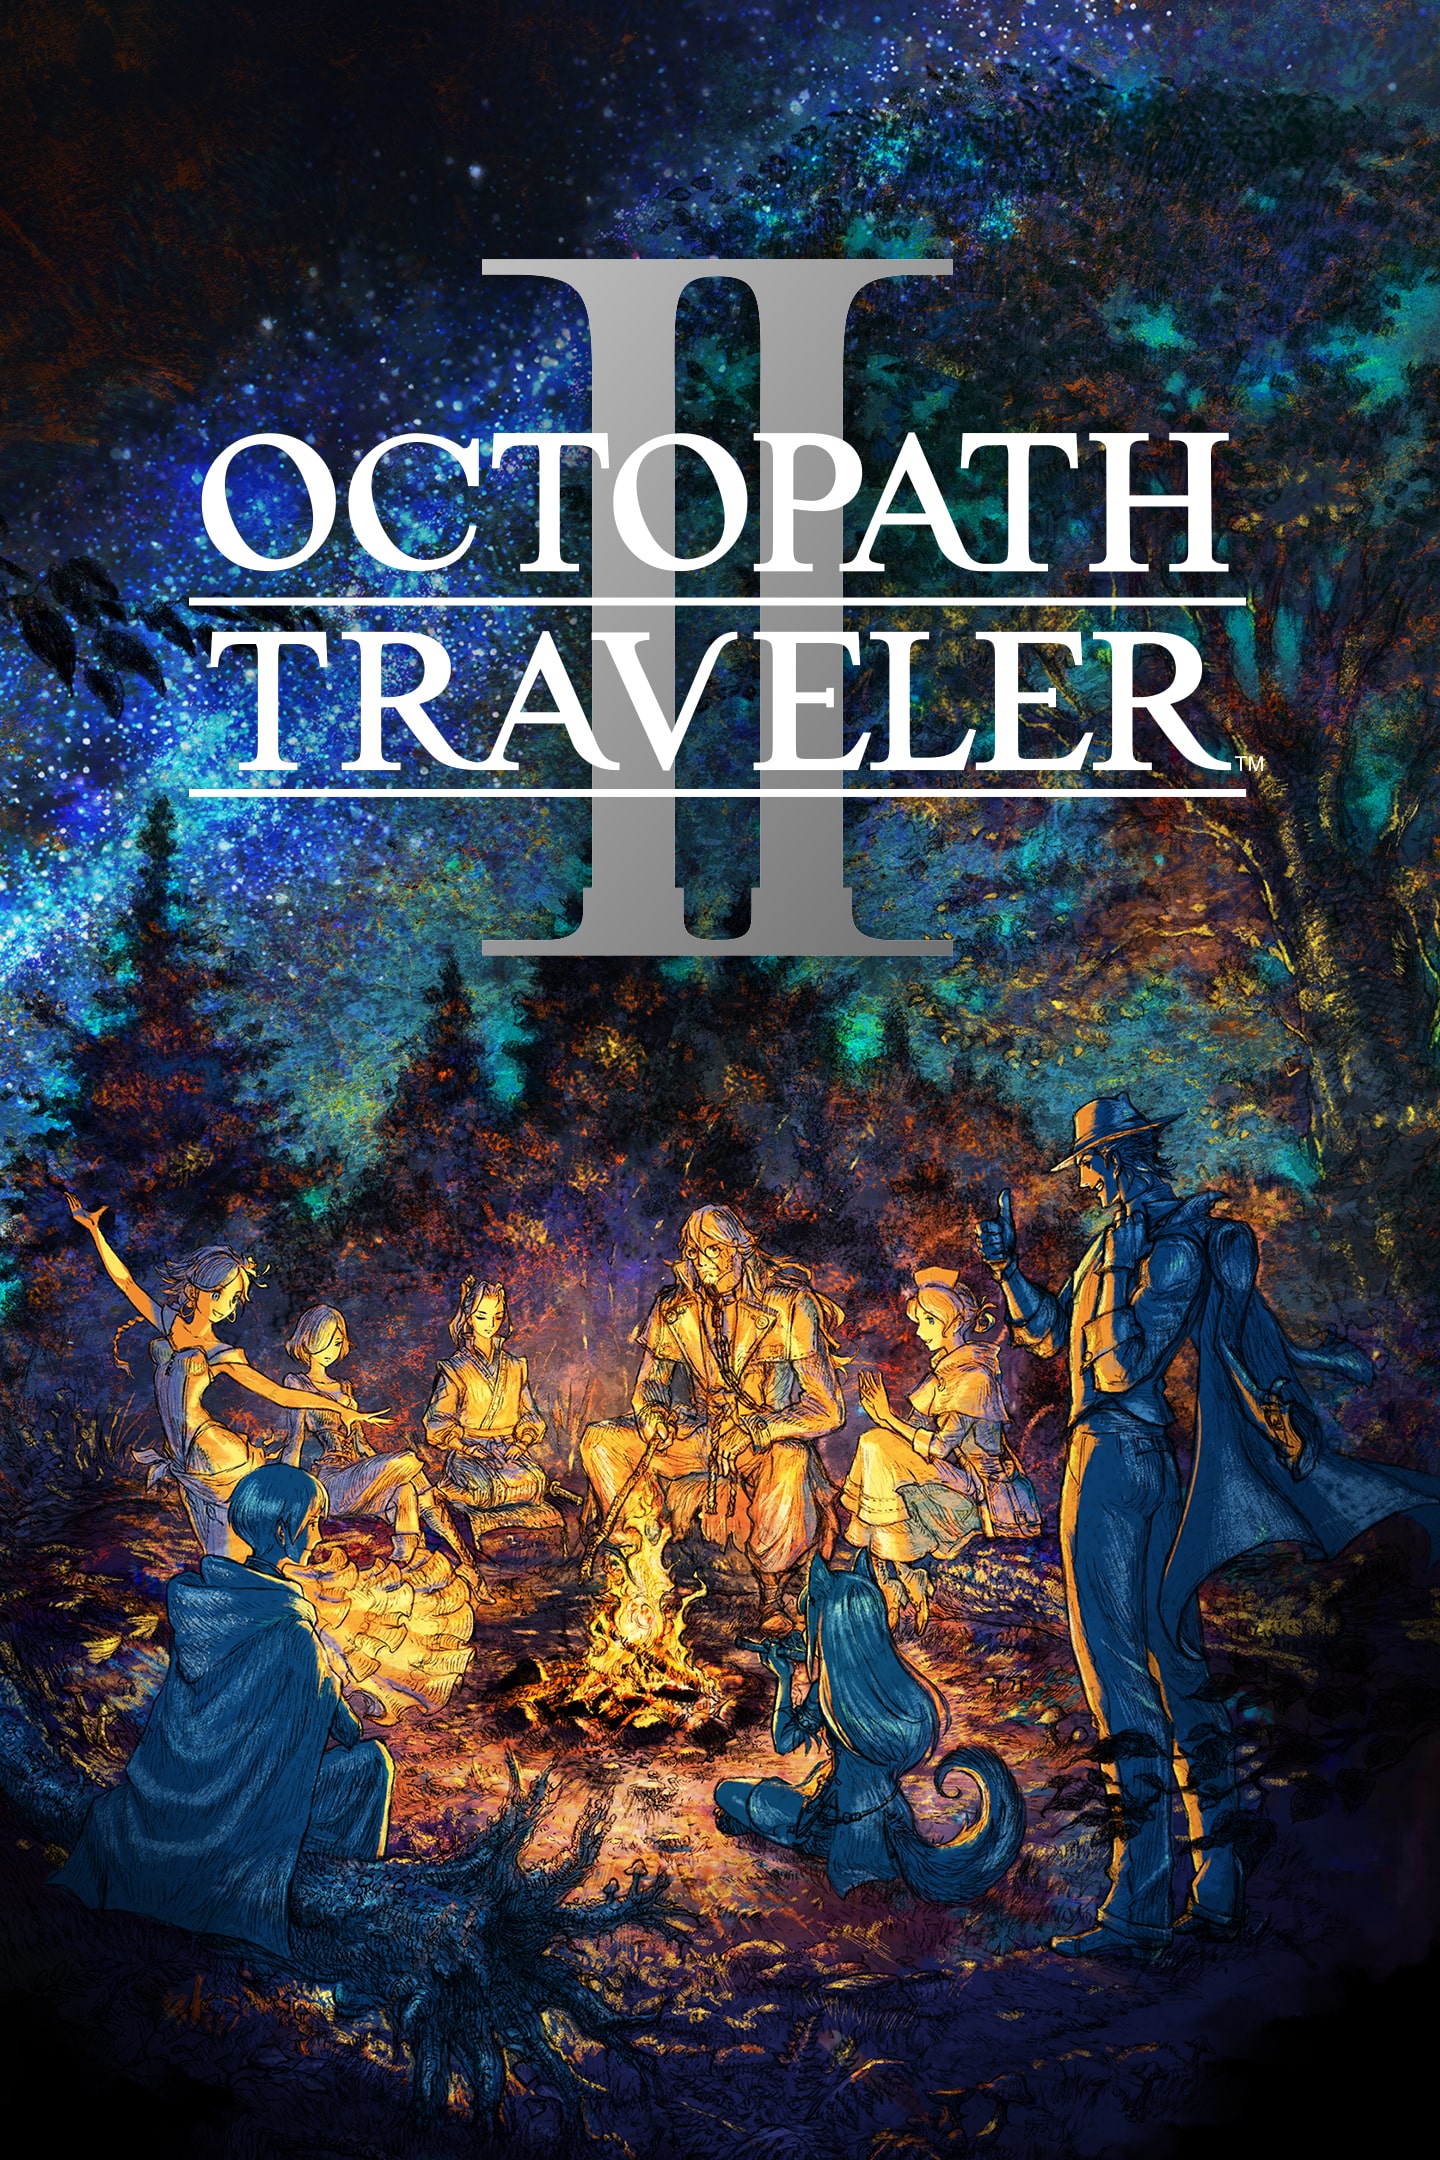 Octopath Traveler II - PlayStation 4